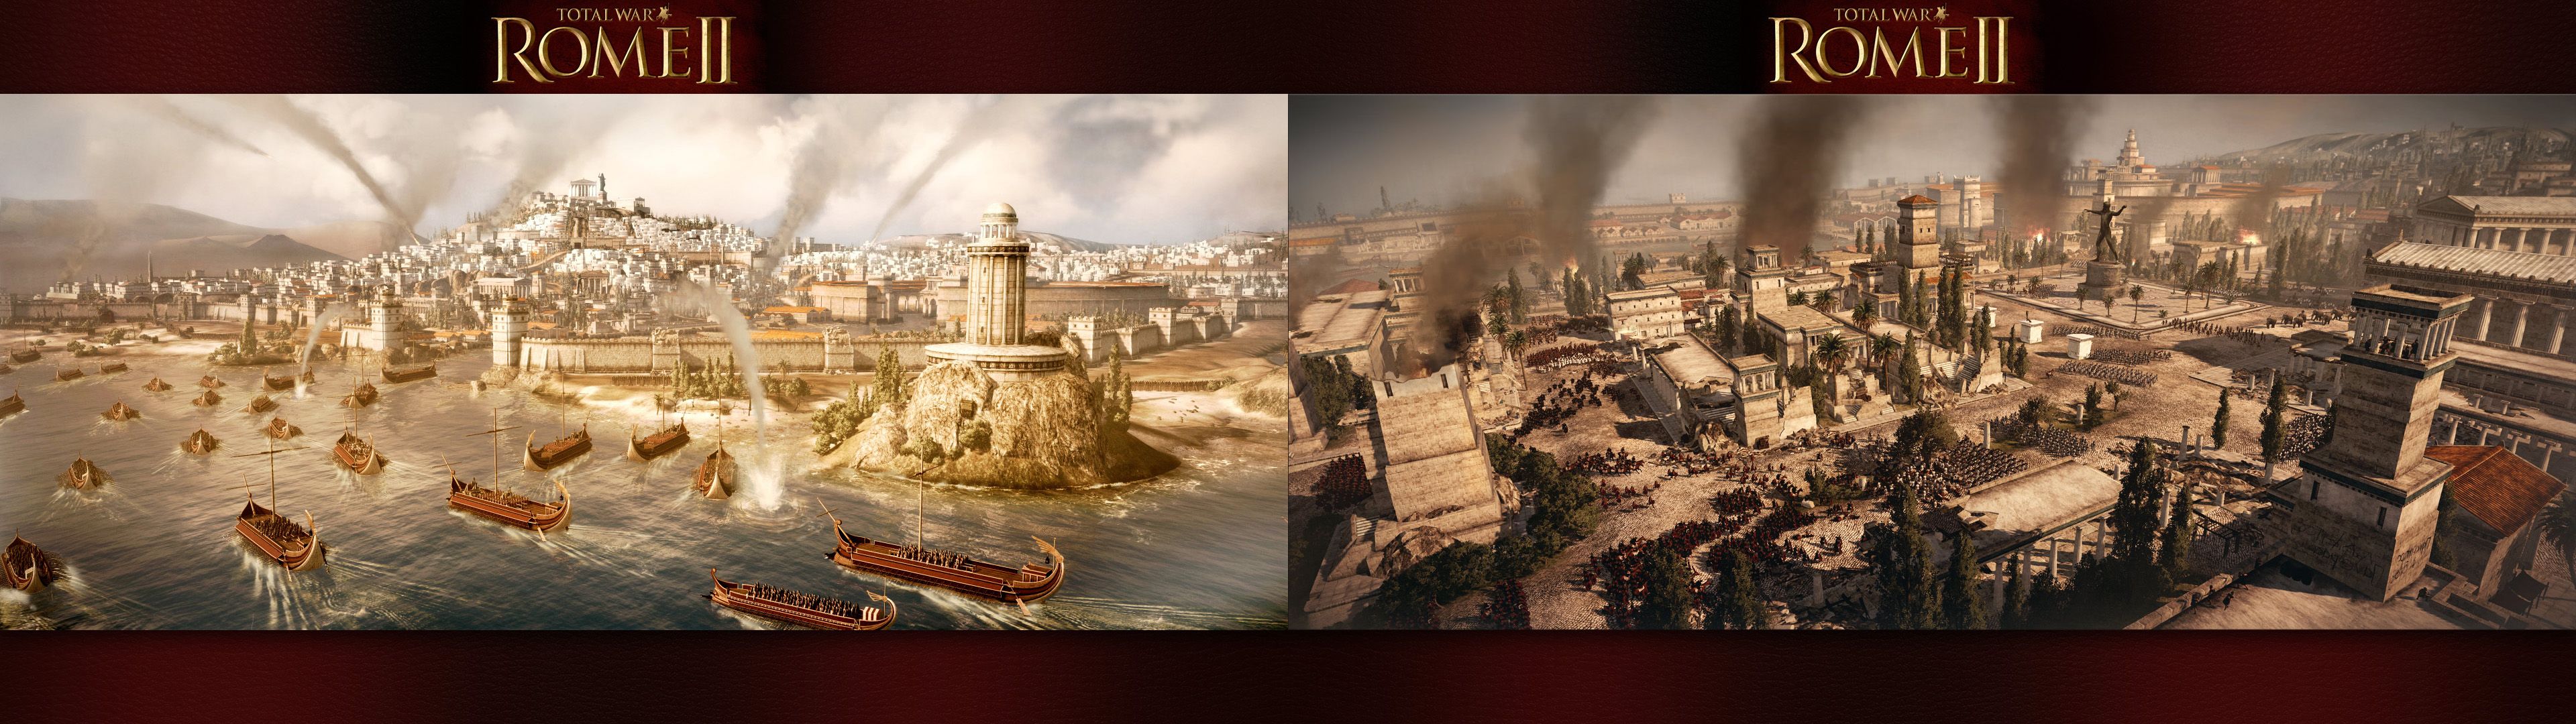 Rome 2 Total War Wallpapers by Garsondee on DeviantArt